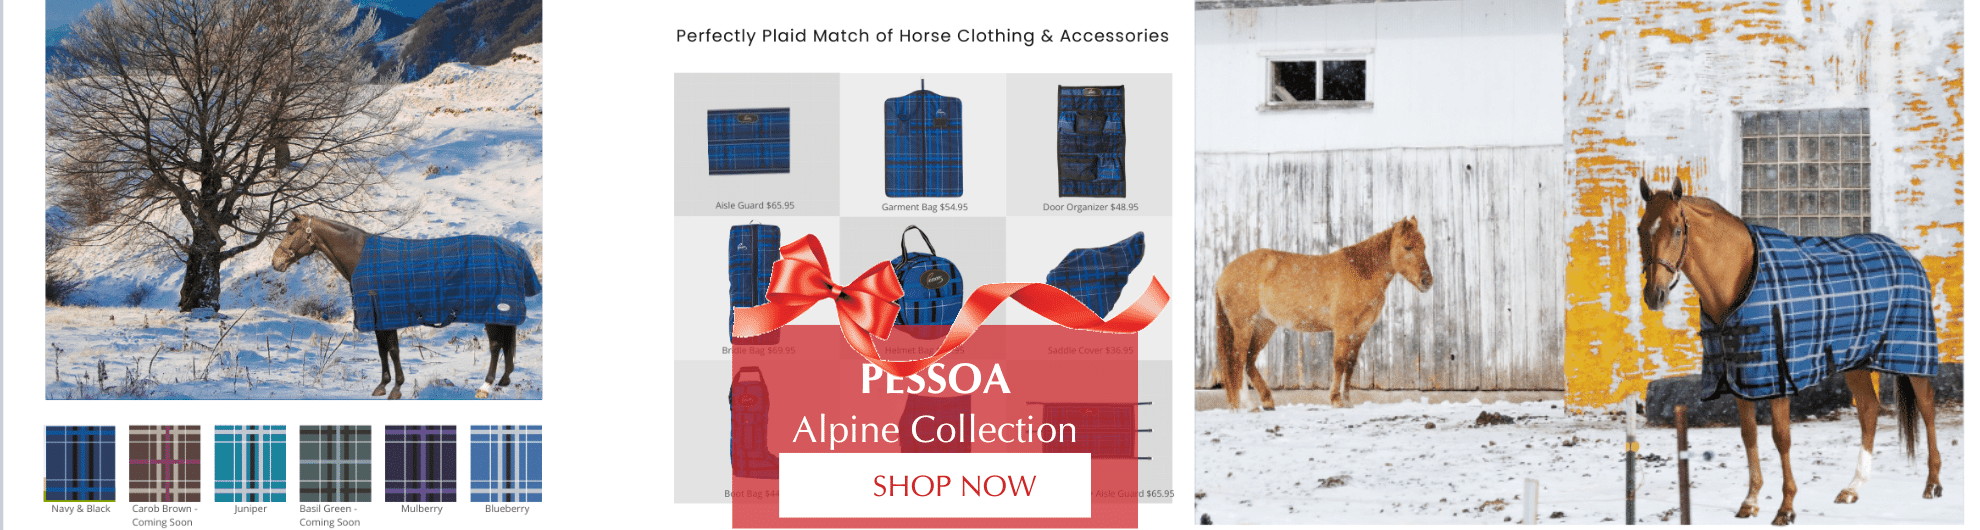 Pessoa Alpine Collection